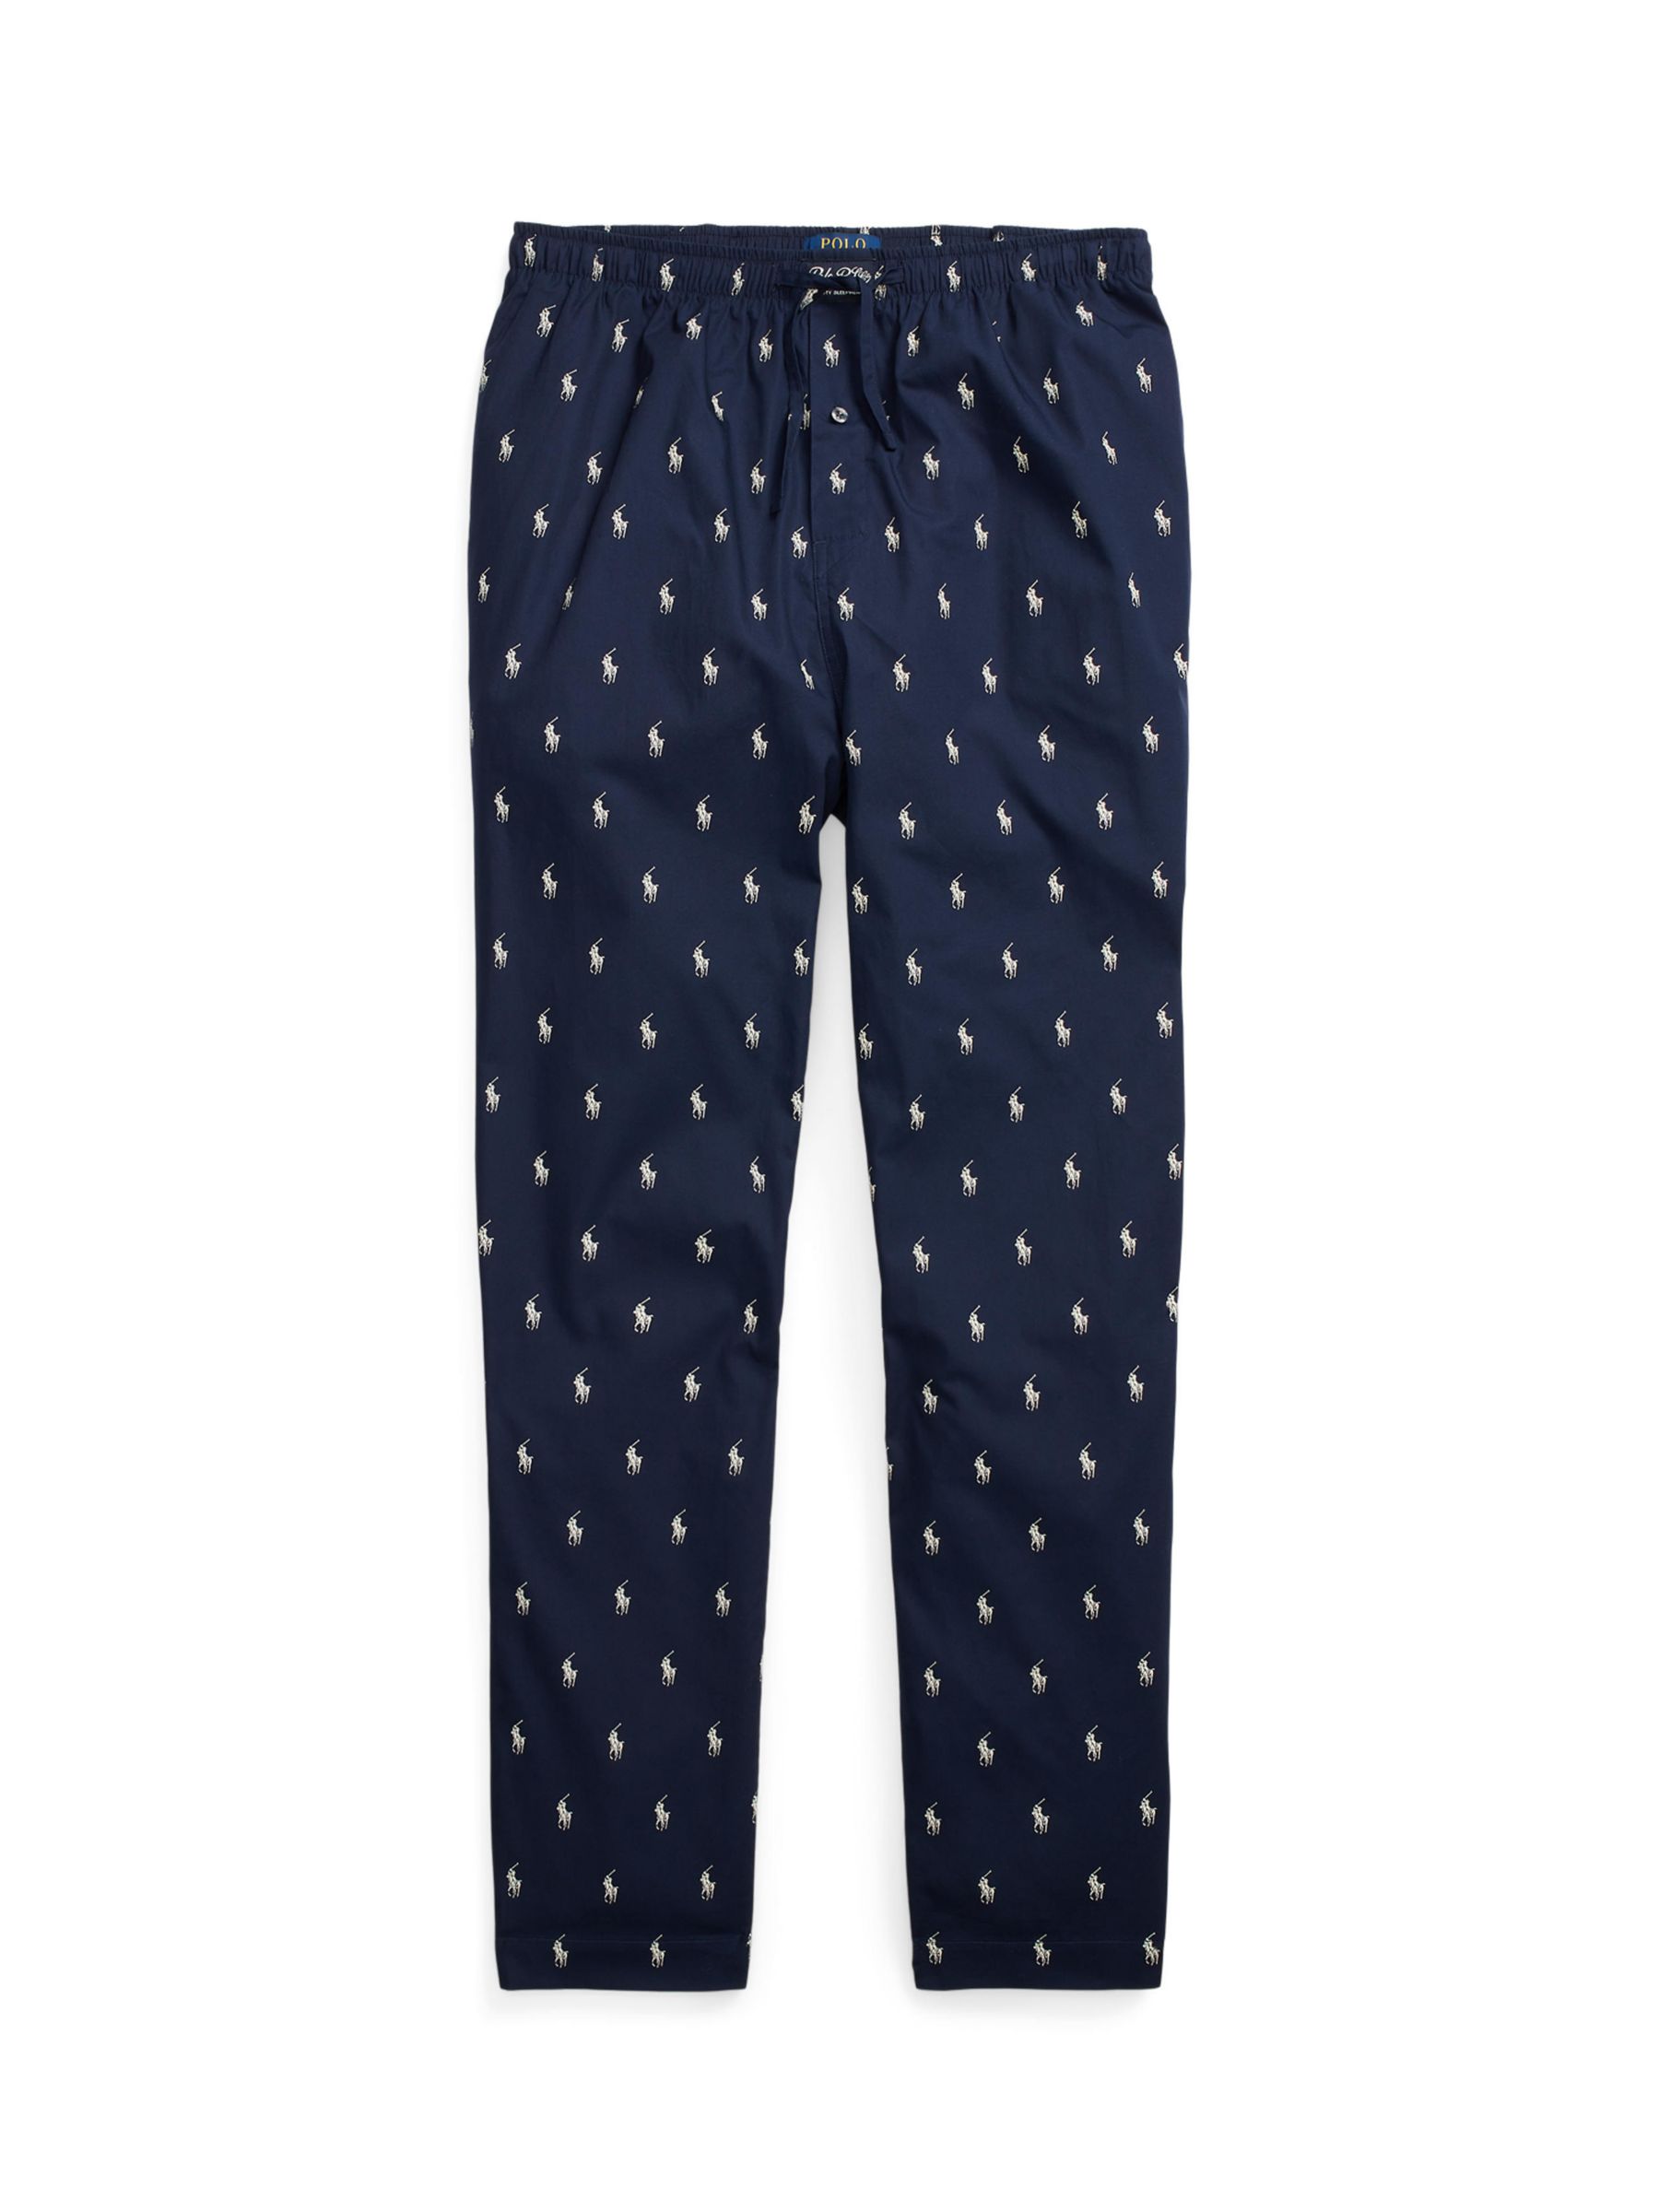 Polo Ralph Lauren Logo Pyjama Bottoms, Navy, S